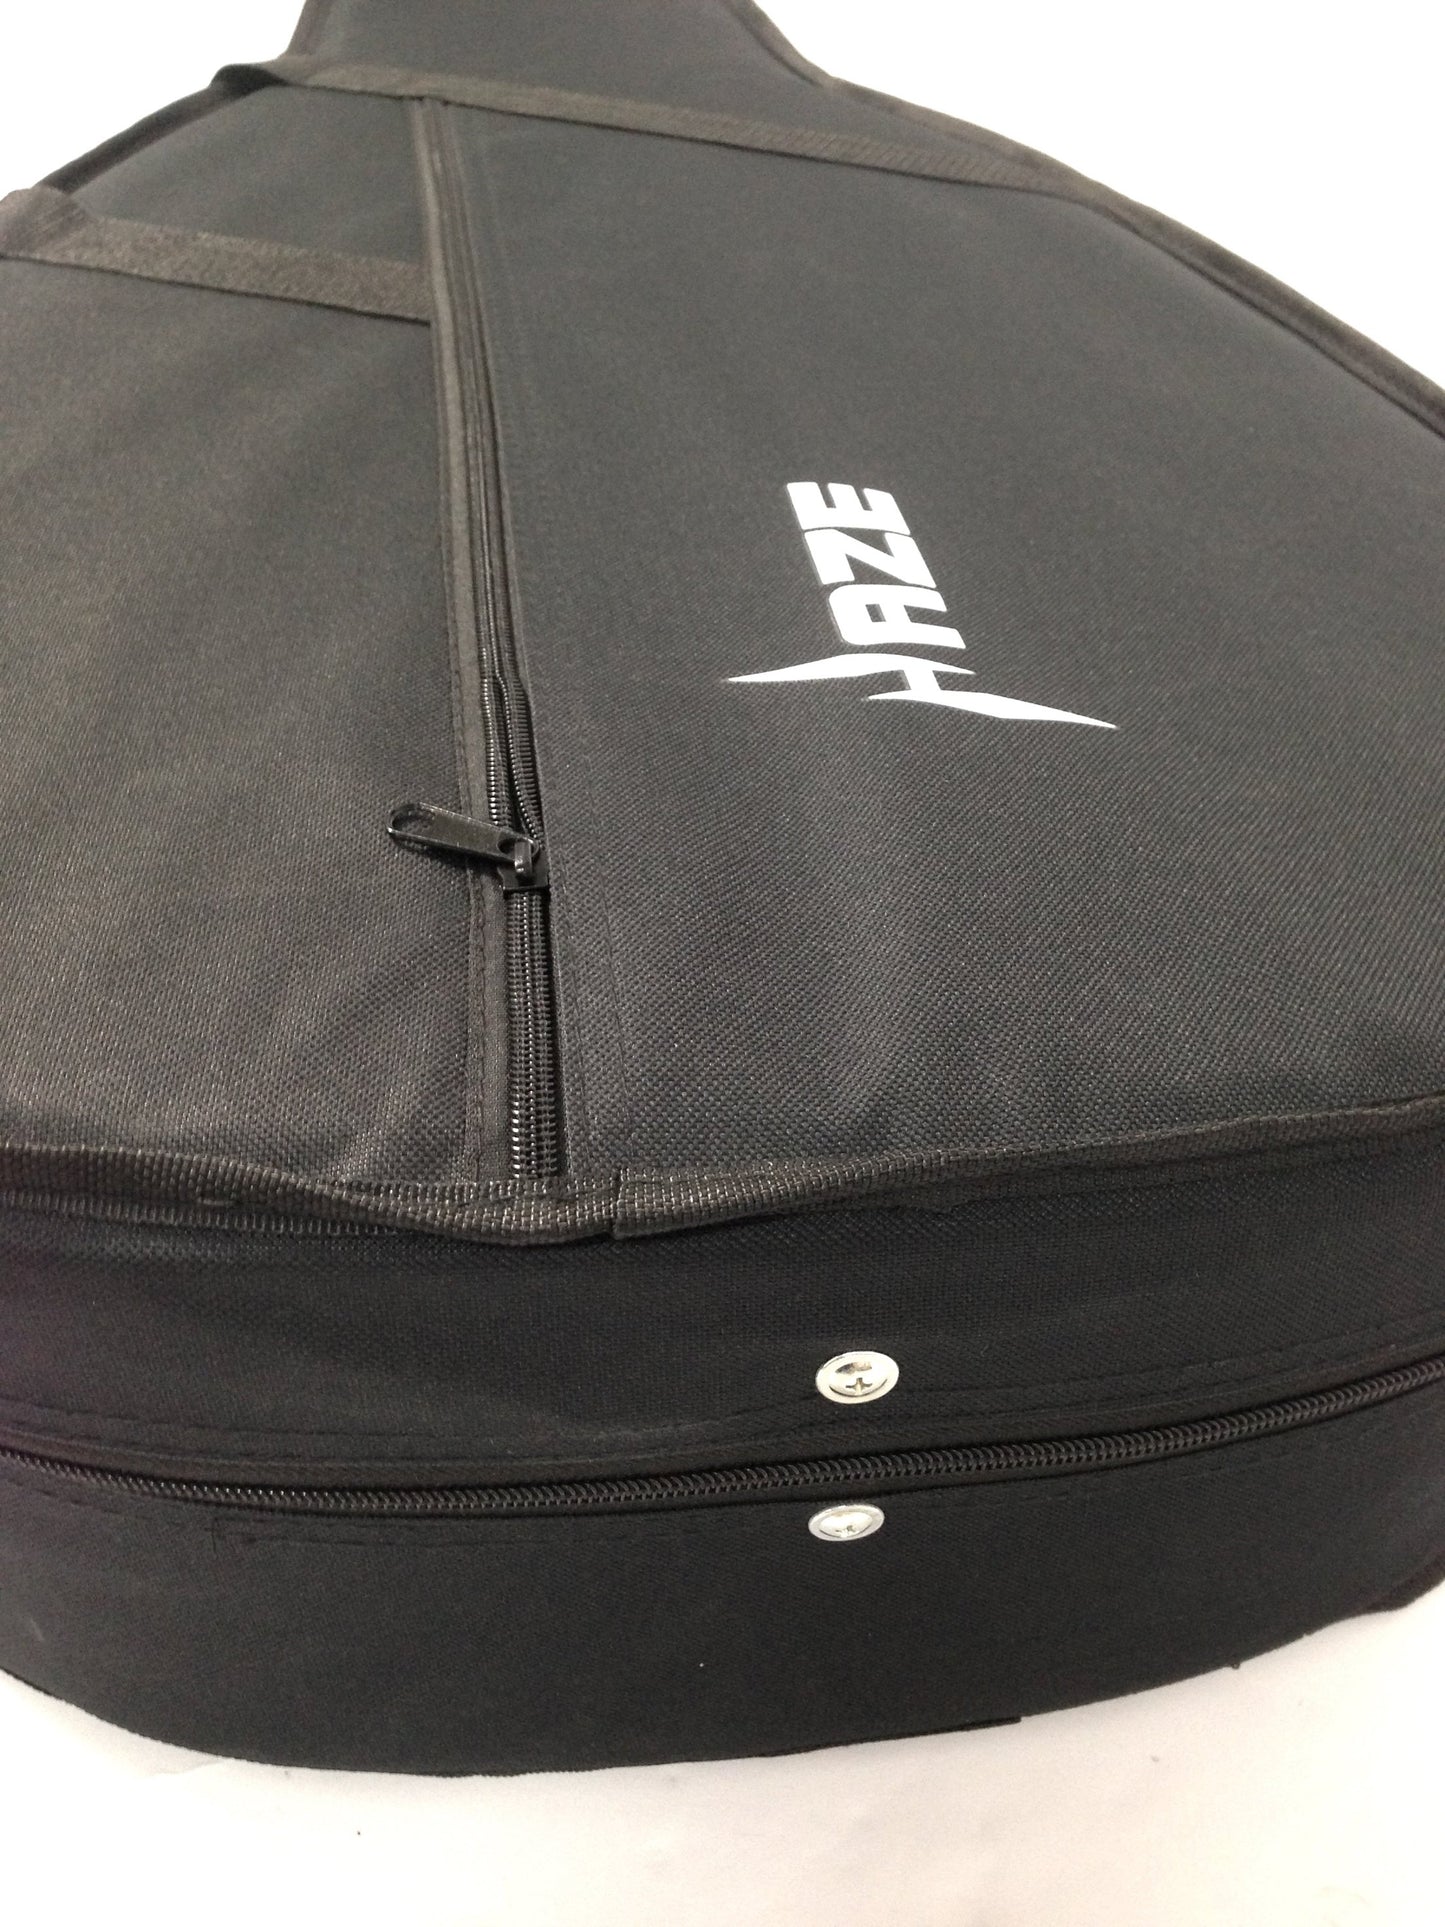 Haze HPAA19A01 Lightweight Hard Foam Case for Acoustic Guitar, Nylon Exterior